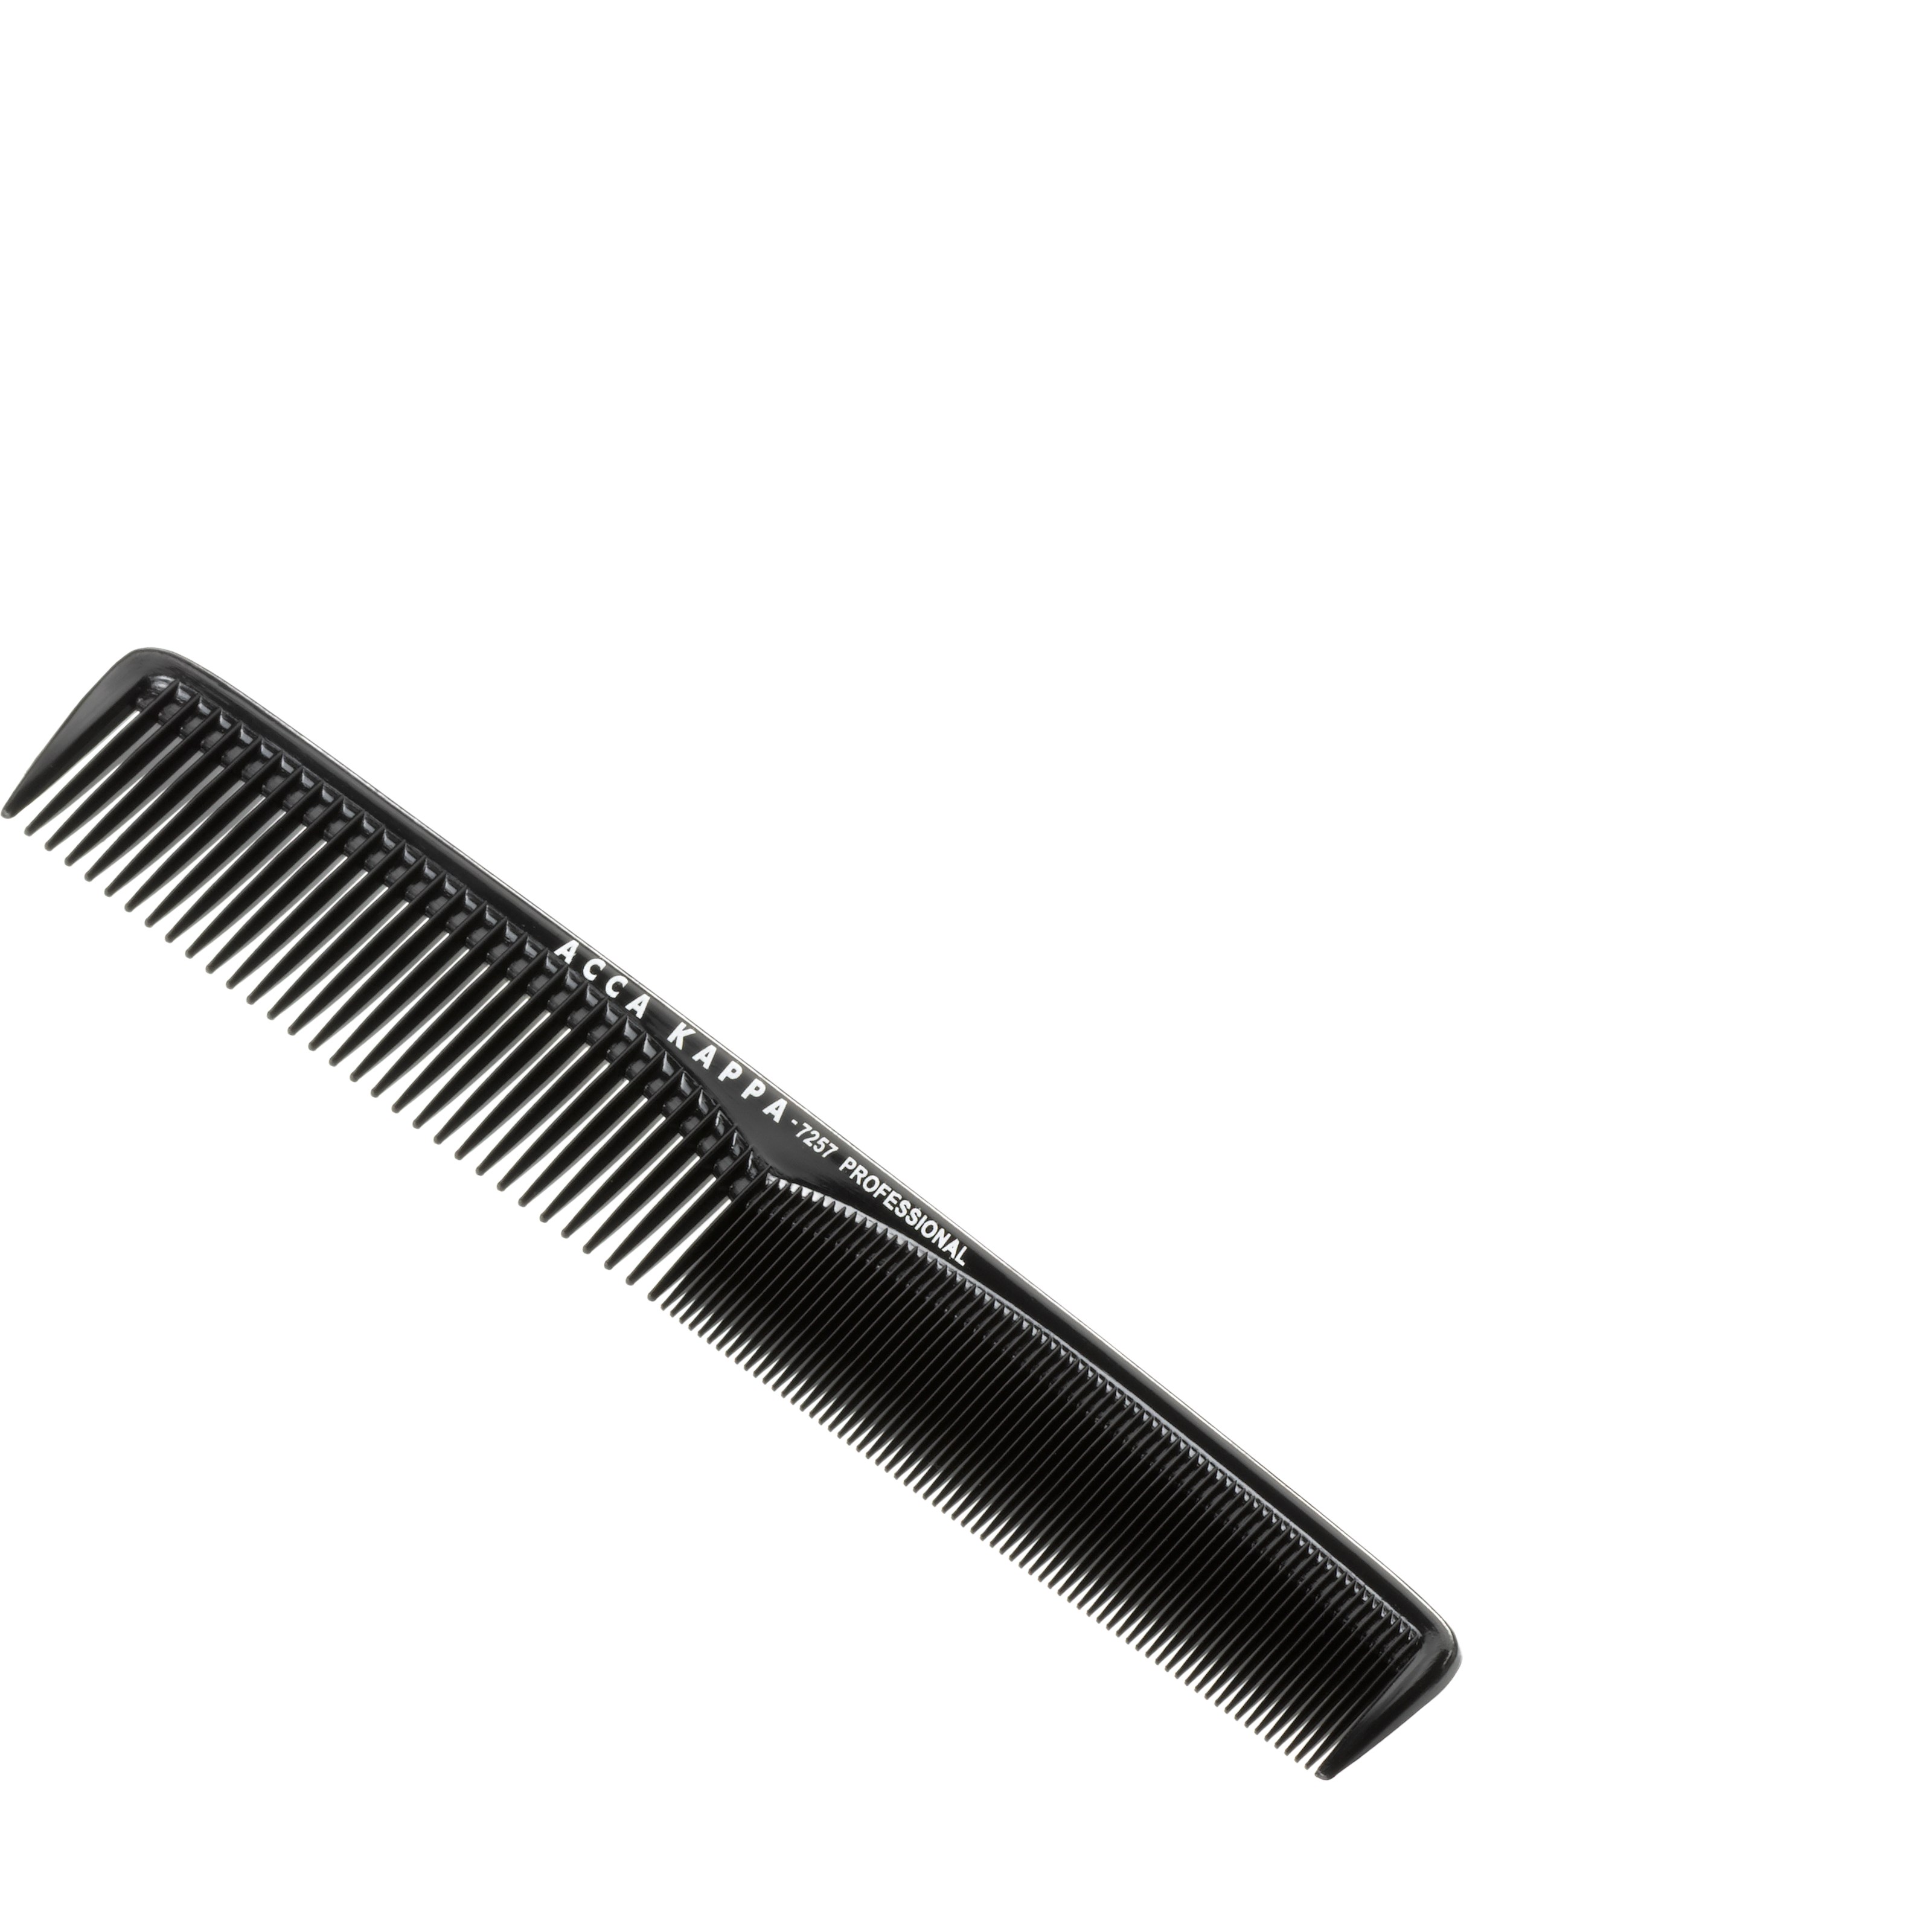 Bilde av Acca Kappa Professional Styling Fine Coarse Teeth Comb – 7257 Black